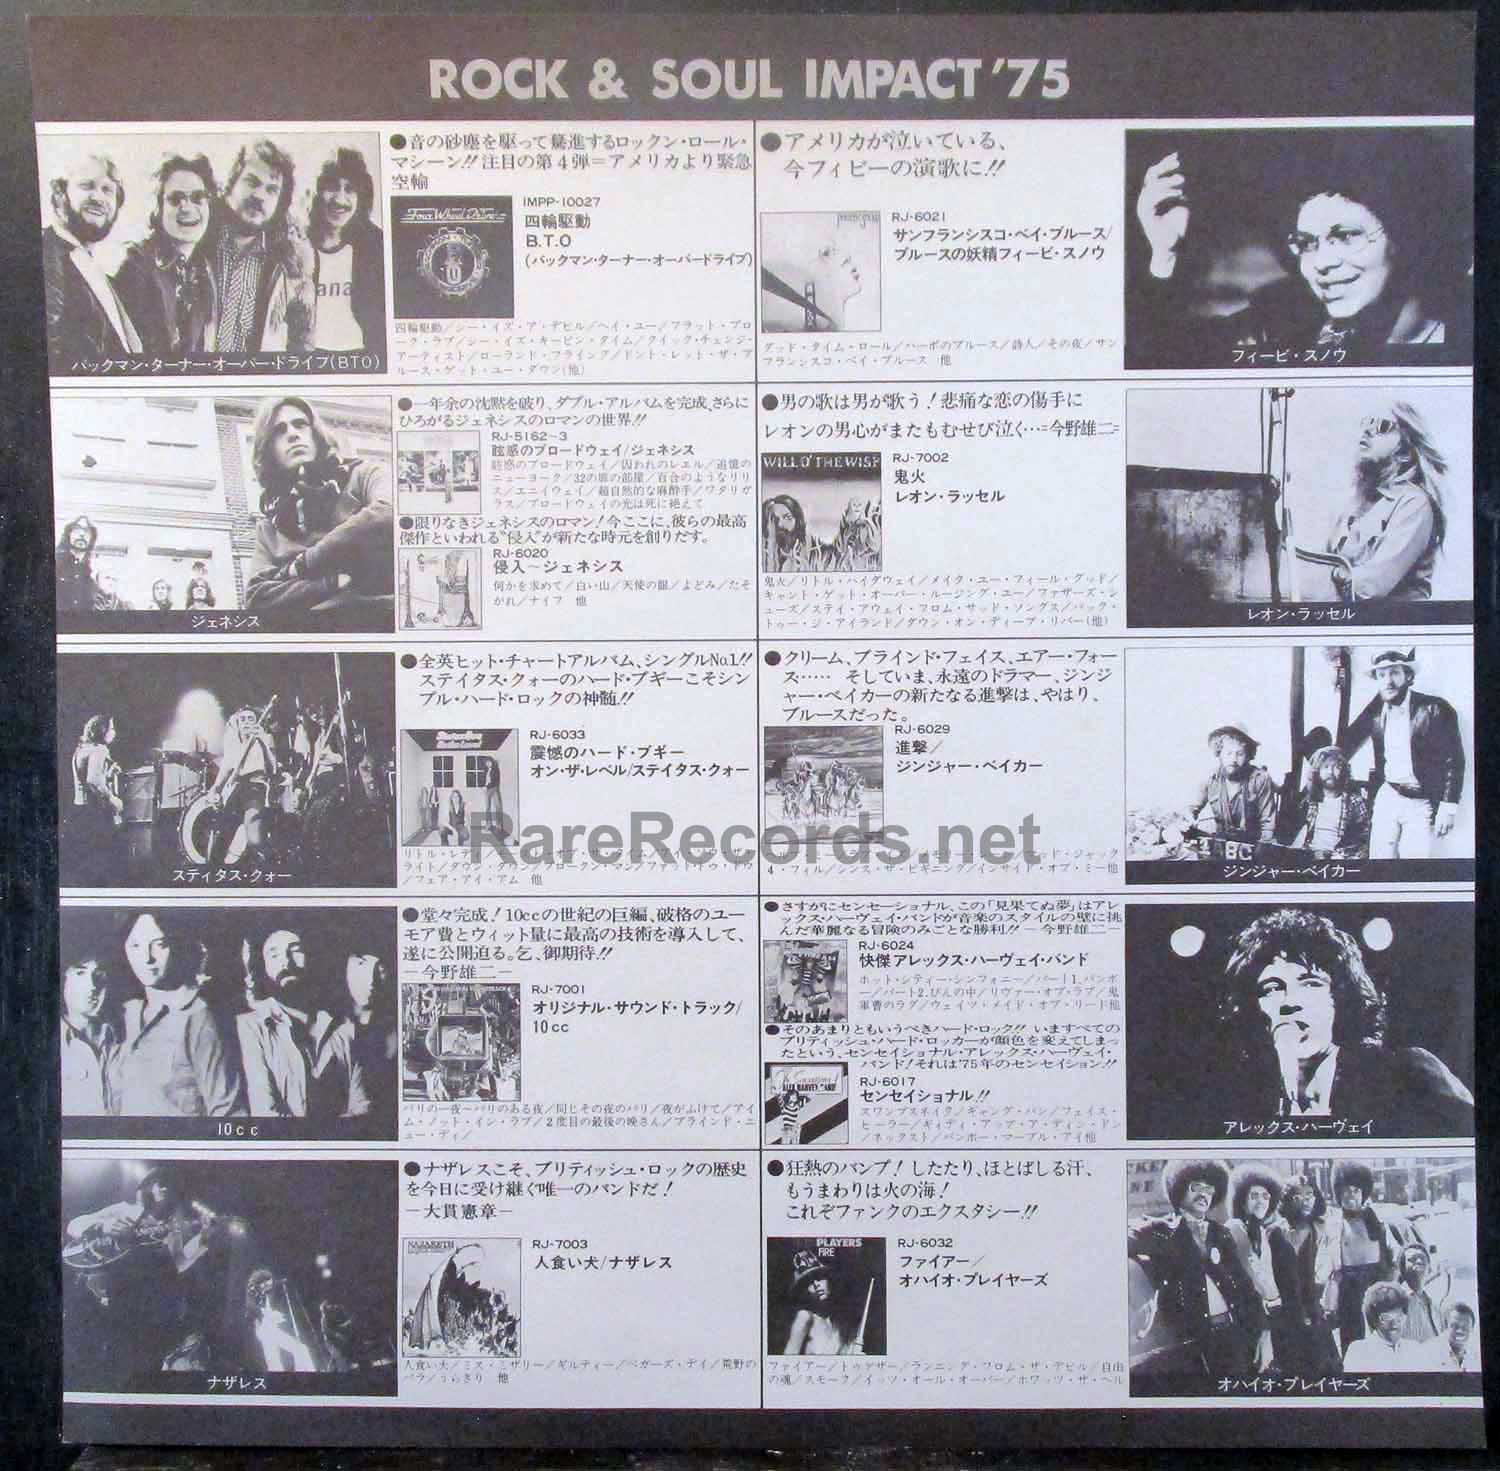 Black Sabbath - Best of Black Sabbath 1975 Japan LP with obi